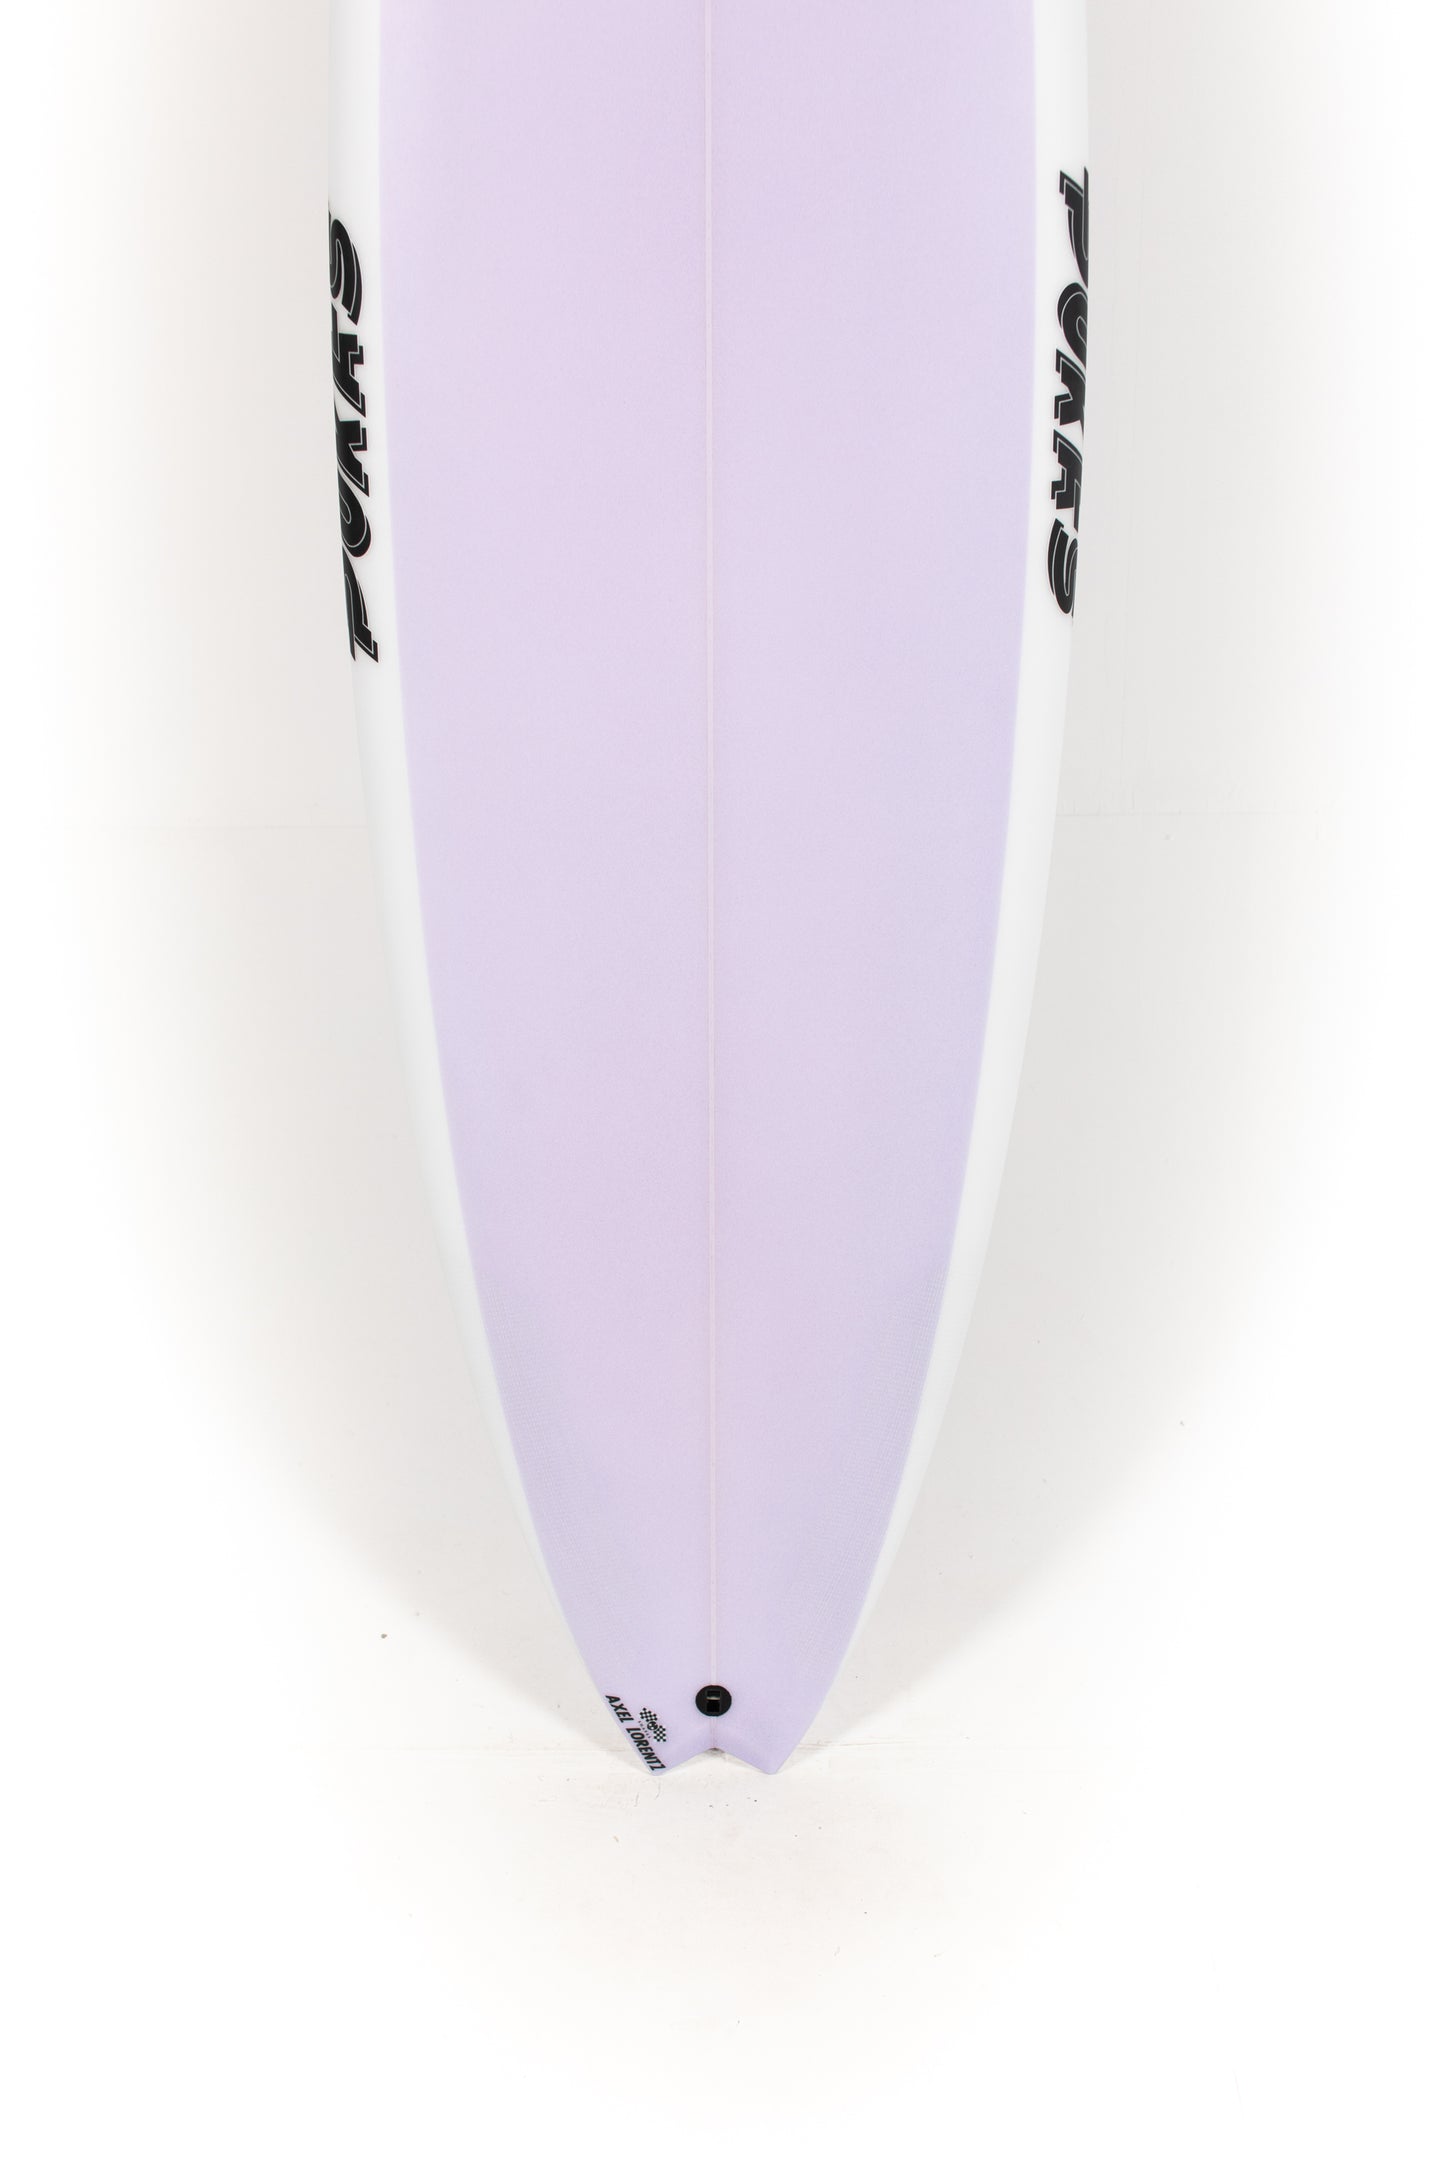 
                  
                    Pukas Surfboard - BABY SWALLOW by Axel Lorentz - 6’7” x 19,37 x 2,56 - 35,53L -  AX08690
                  
                